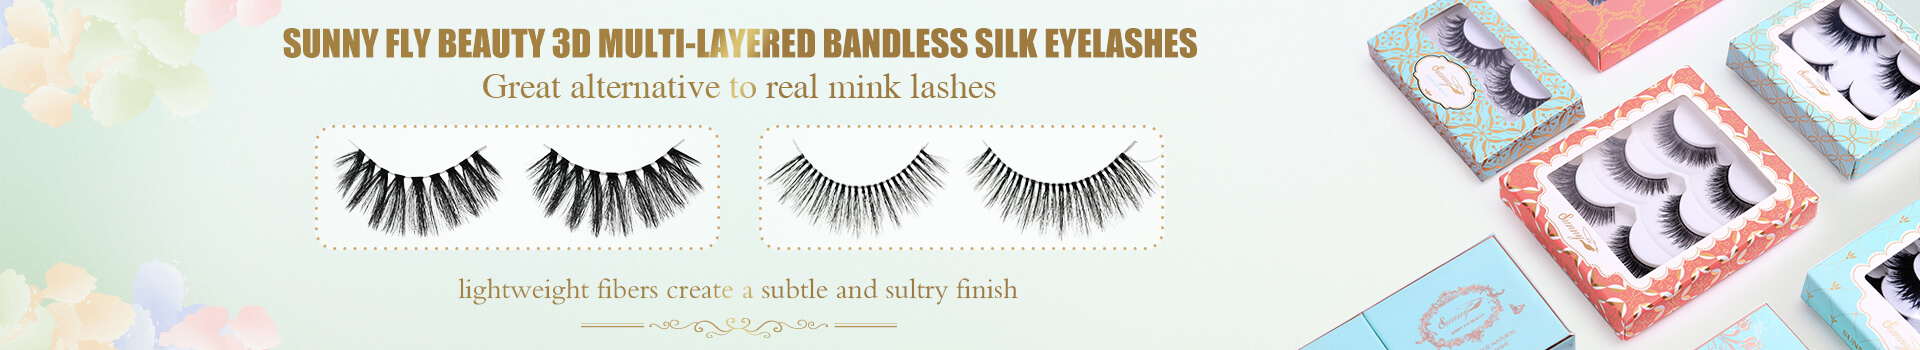 3D Multi-Layered Bandless Silk Eyelas TA08